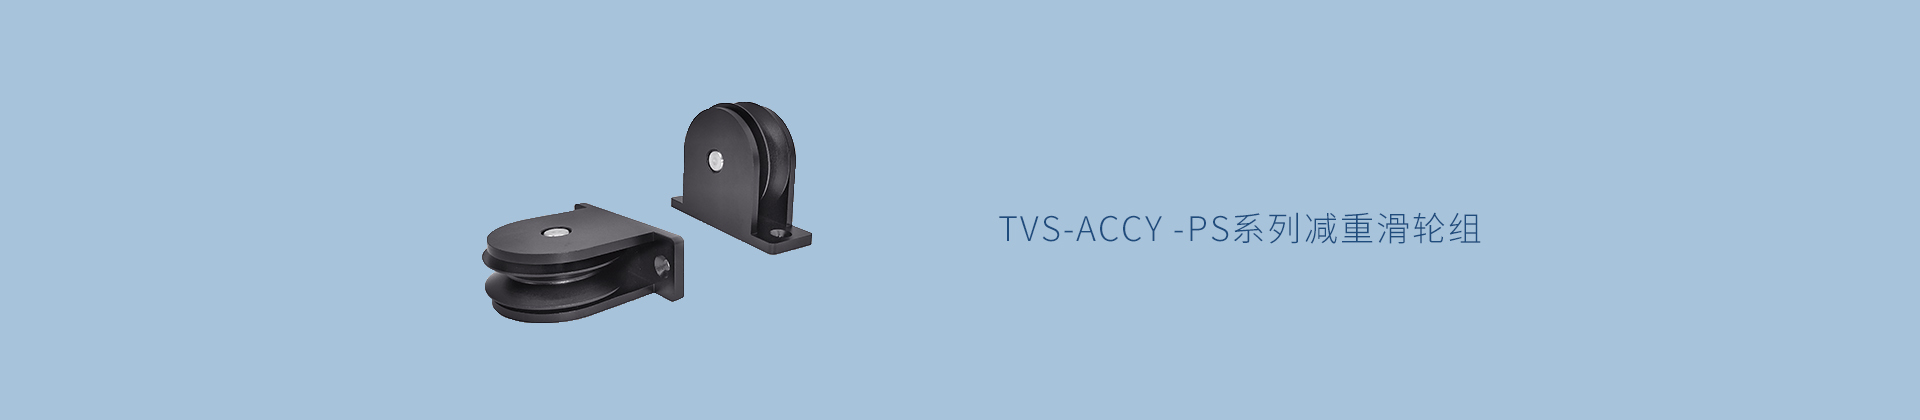 TVS-ACCY -PS系列减重滑轮组